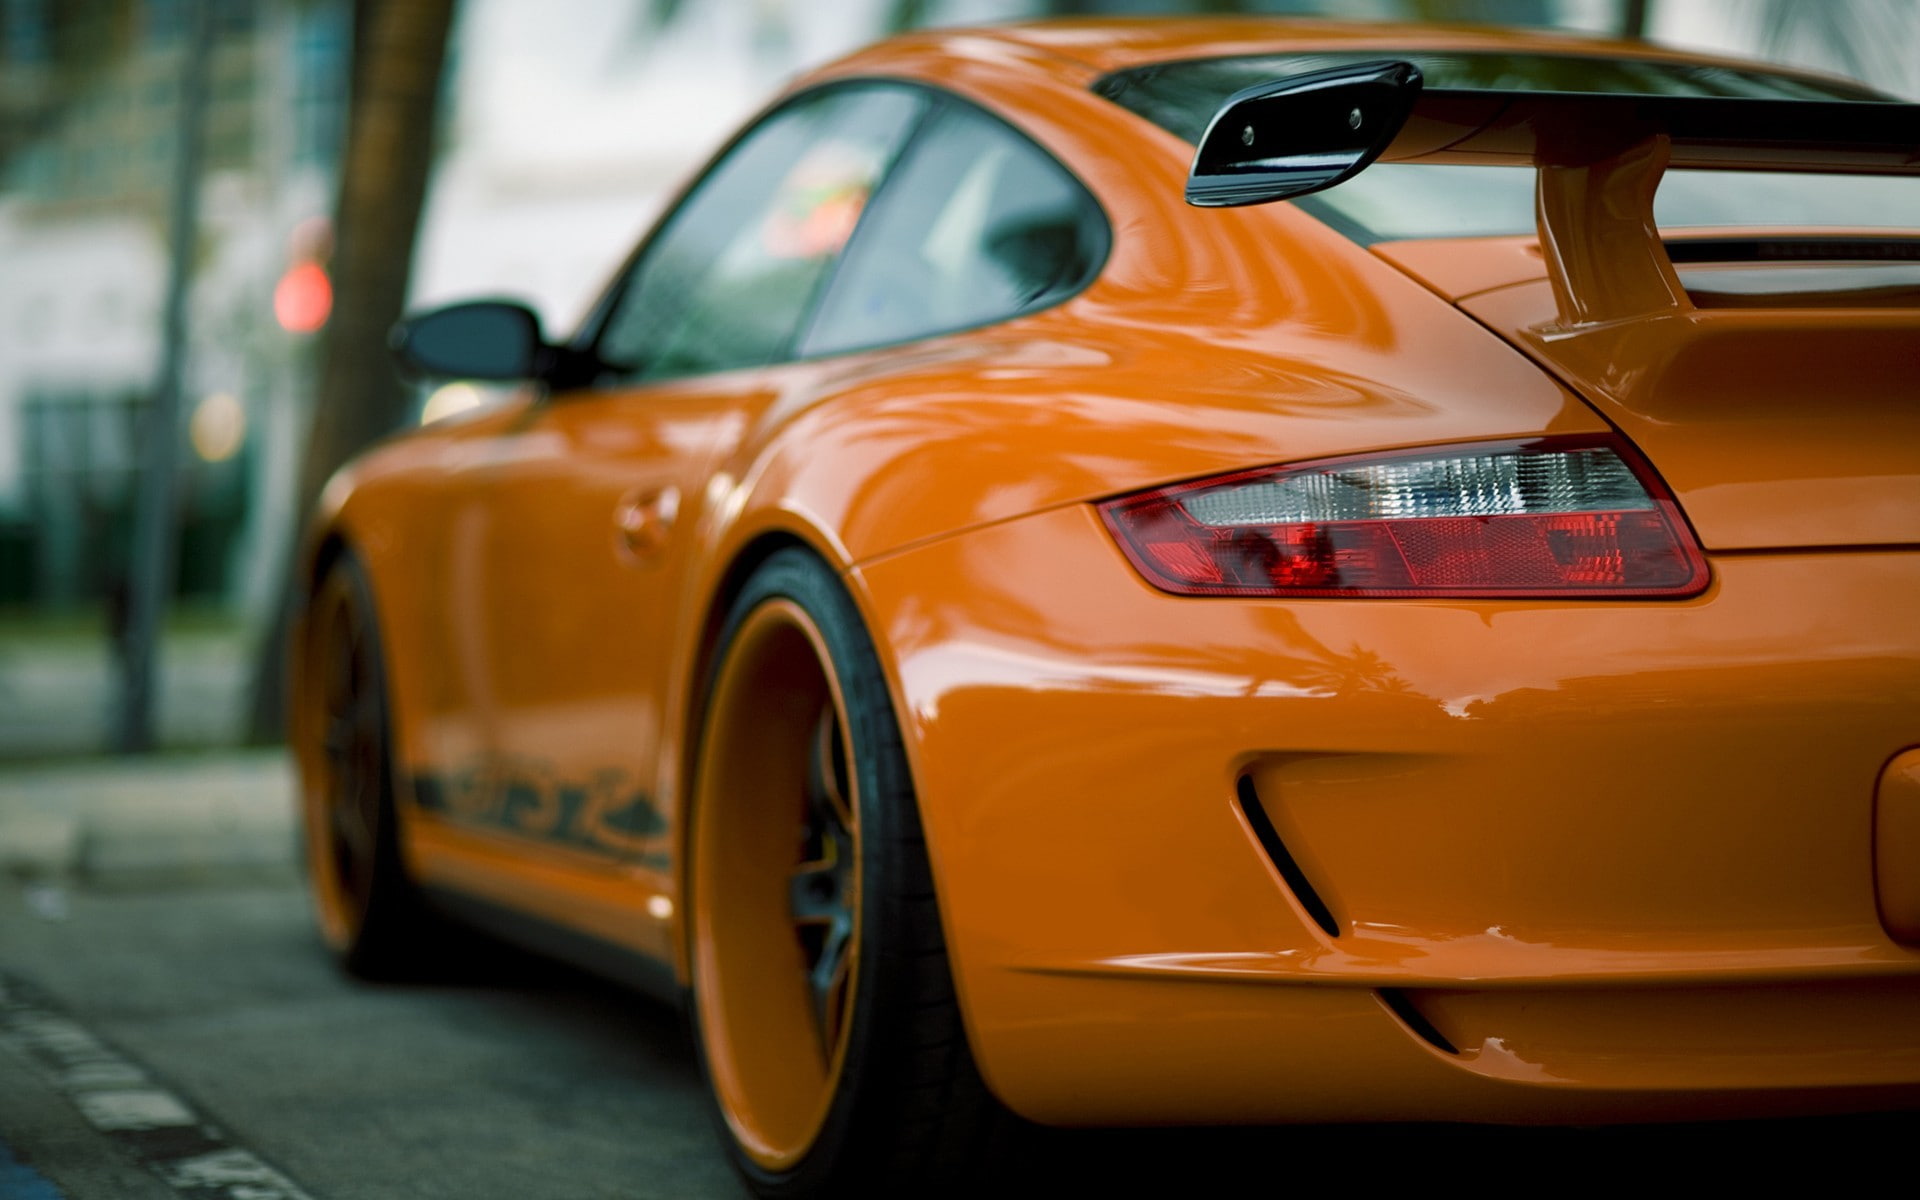 Porsche, Porsche 911, car, orange, Porsche GT3, orange cars